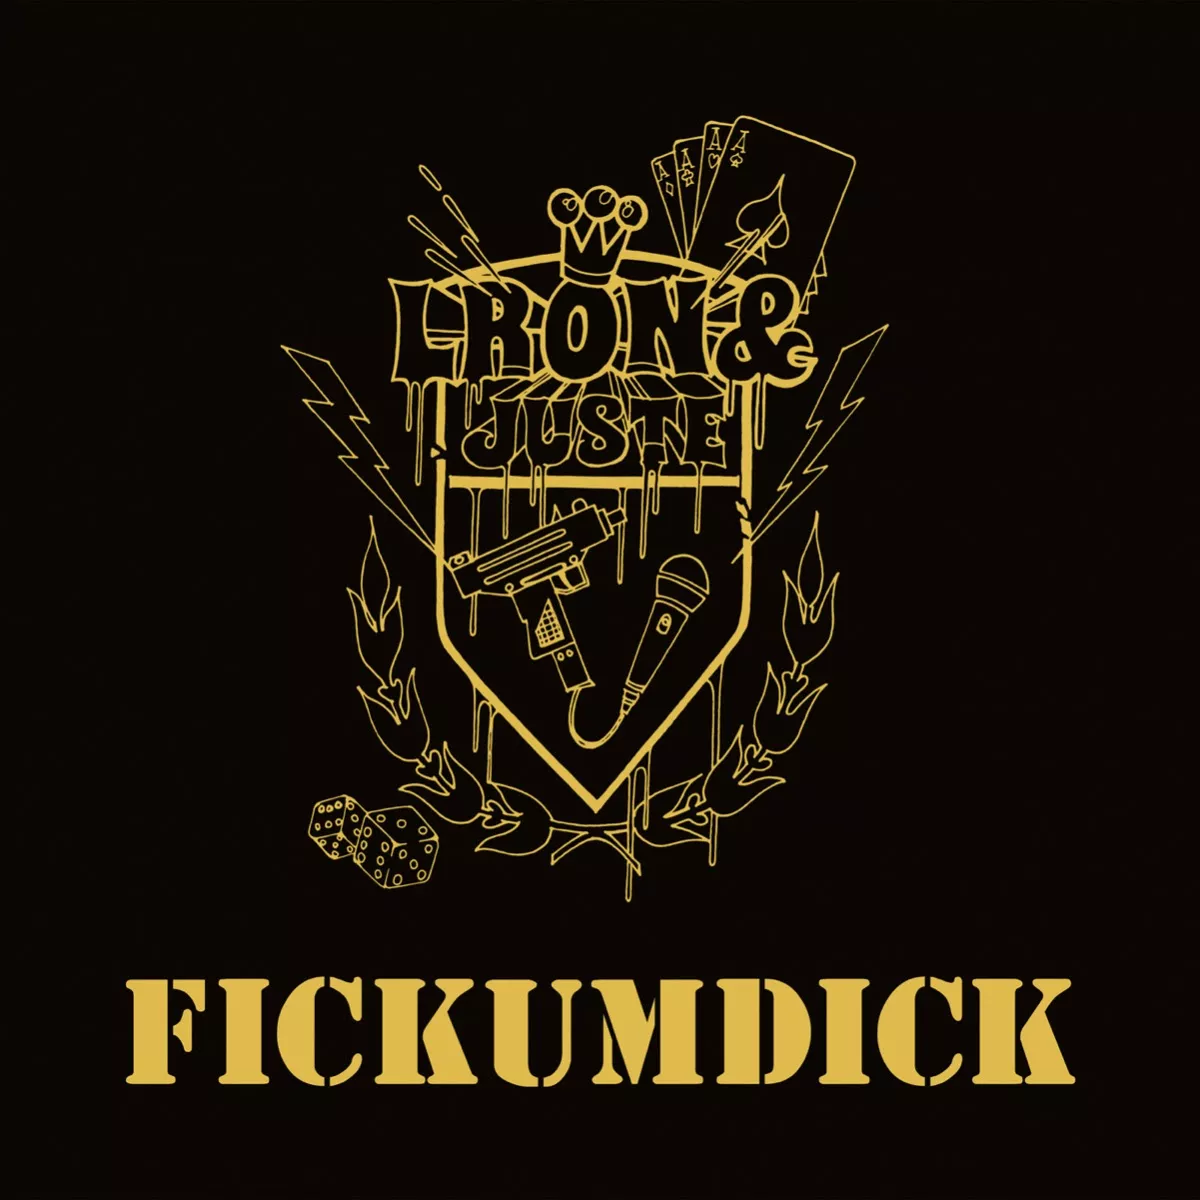 Fickumdick - L:Ron:Harald & Juste